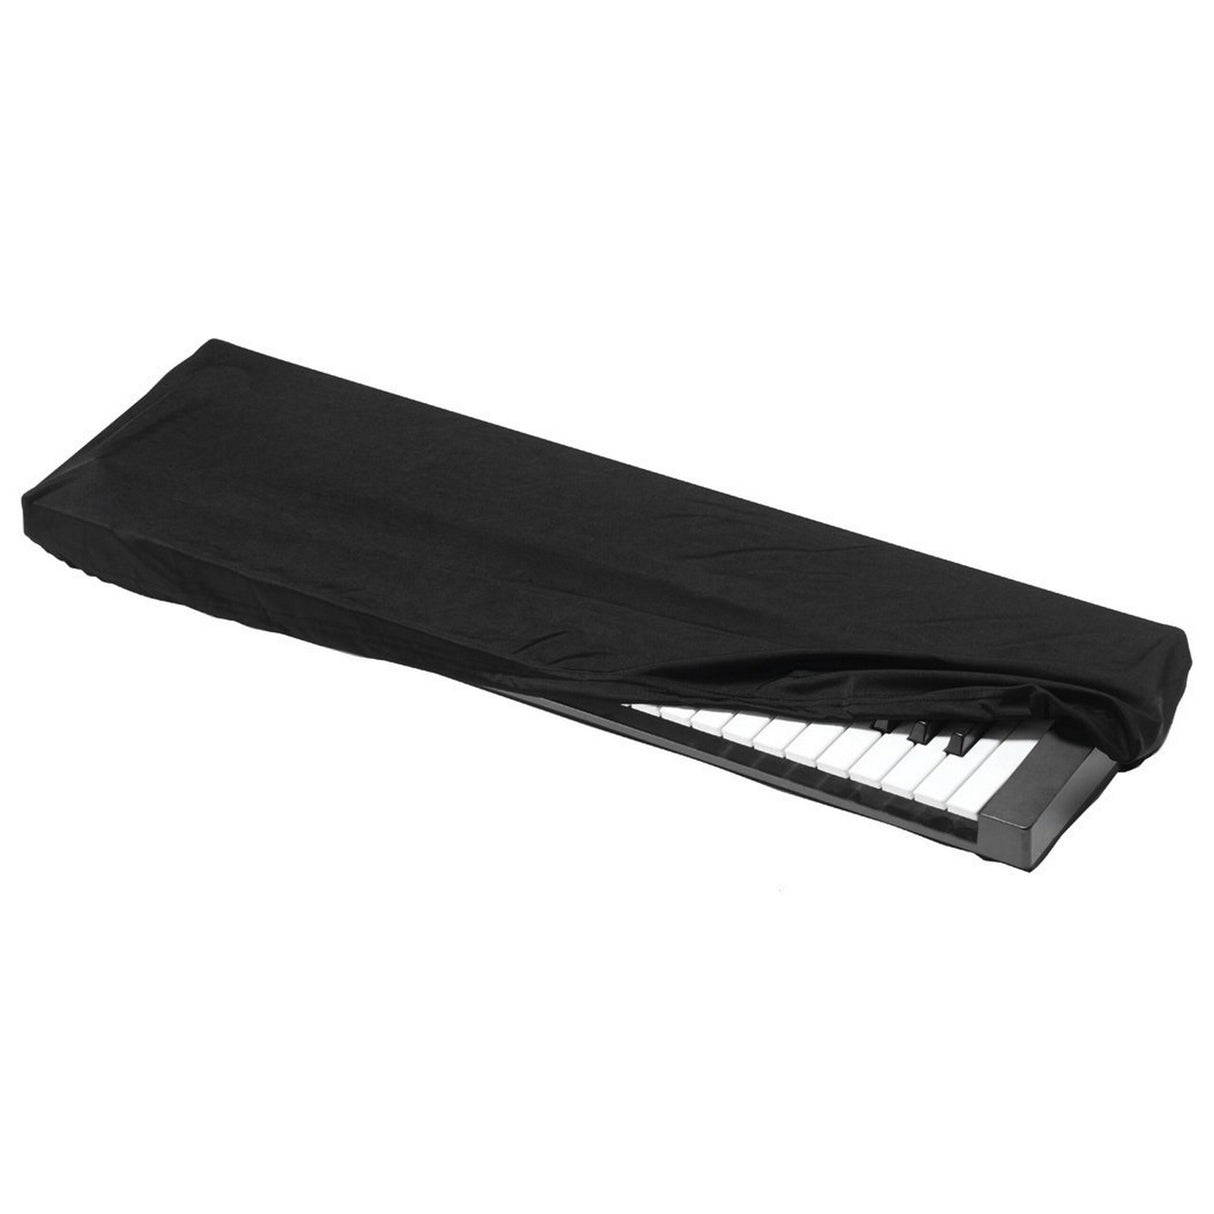 Kaces KKC-SM Stretchy Keyboard Dust Cover - Small (49-61 key)